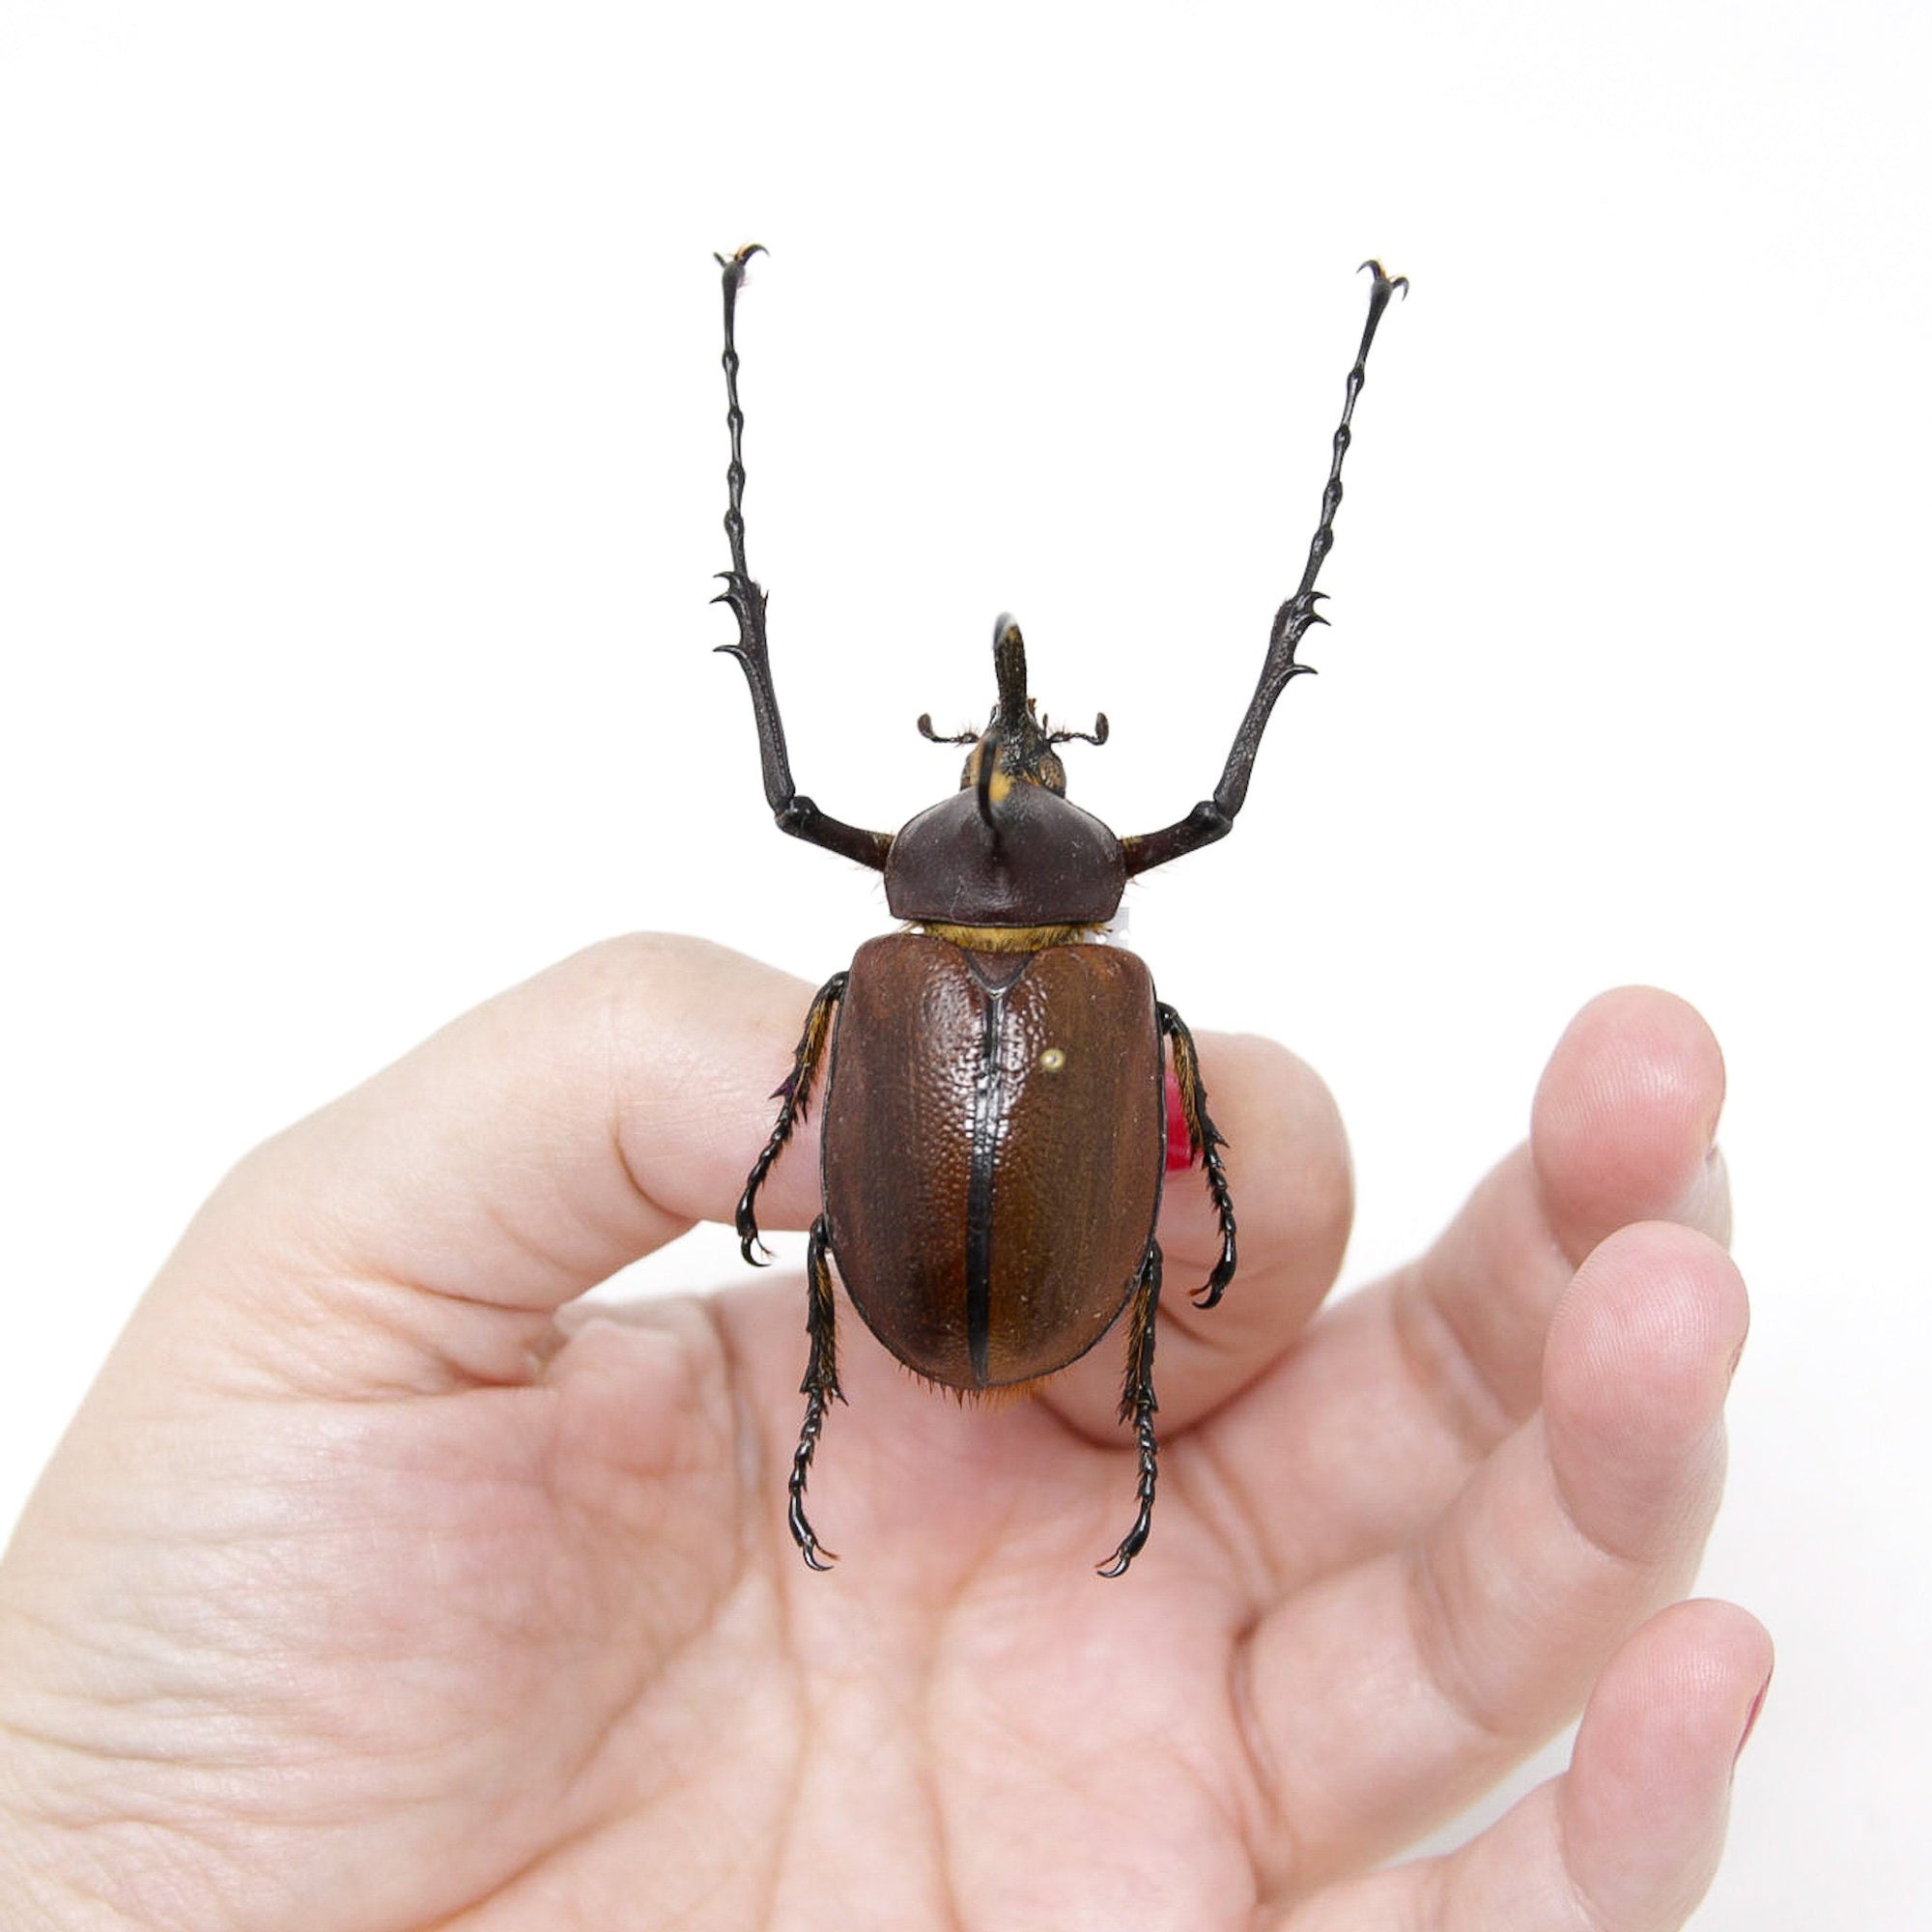 Golofa eacus 48.3mm, A1 Real Beetle Specimen, Entomology Taxidermy #OC07